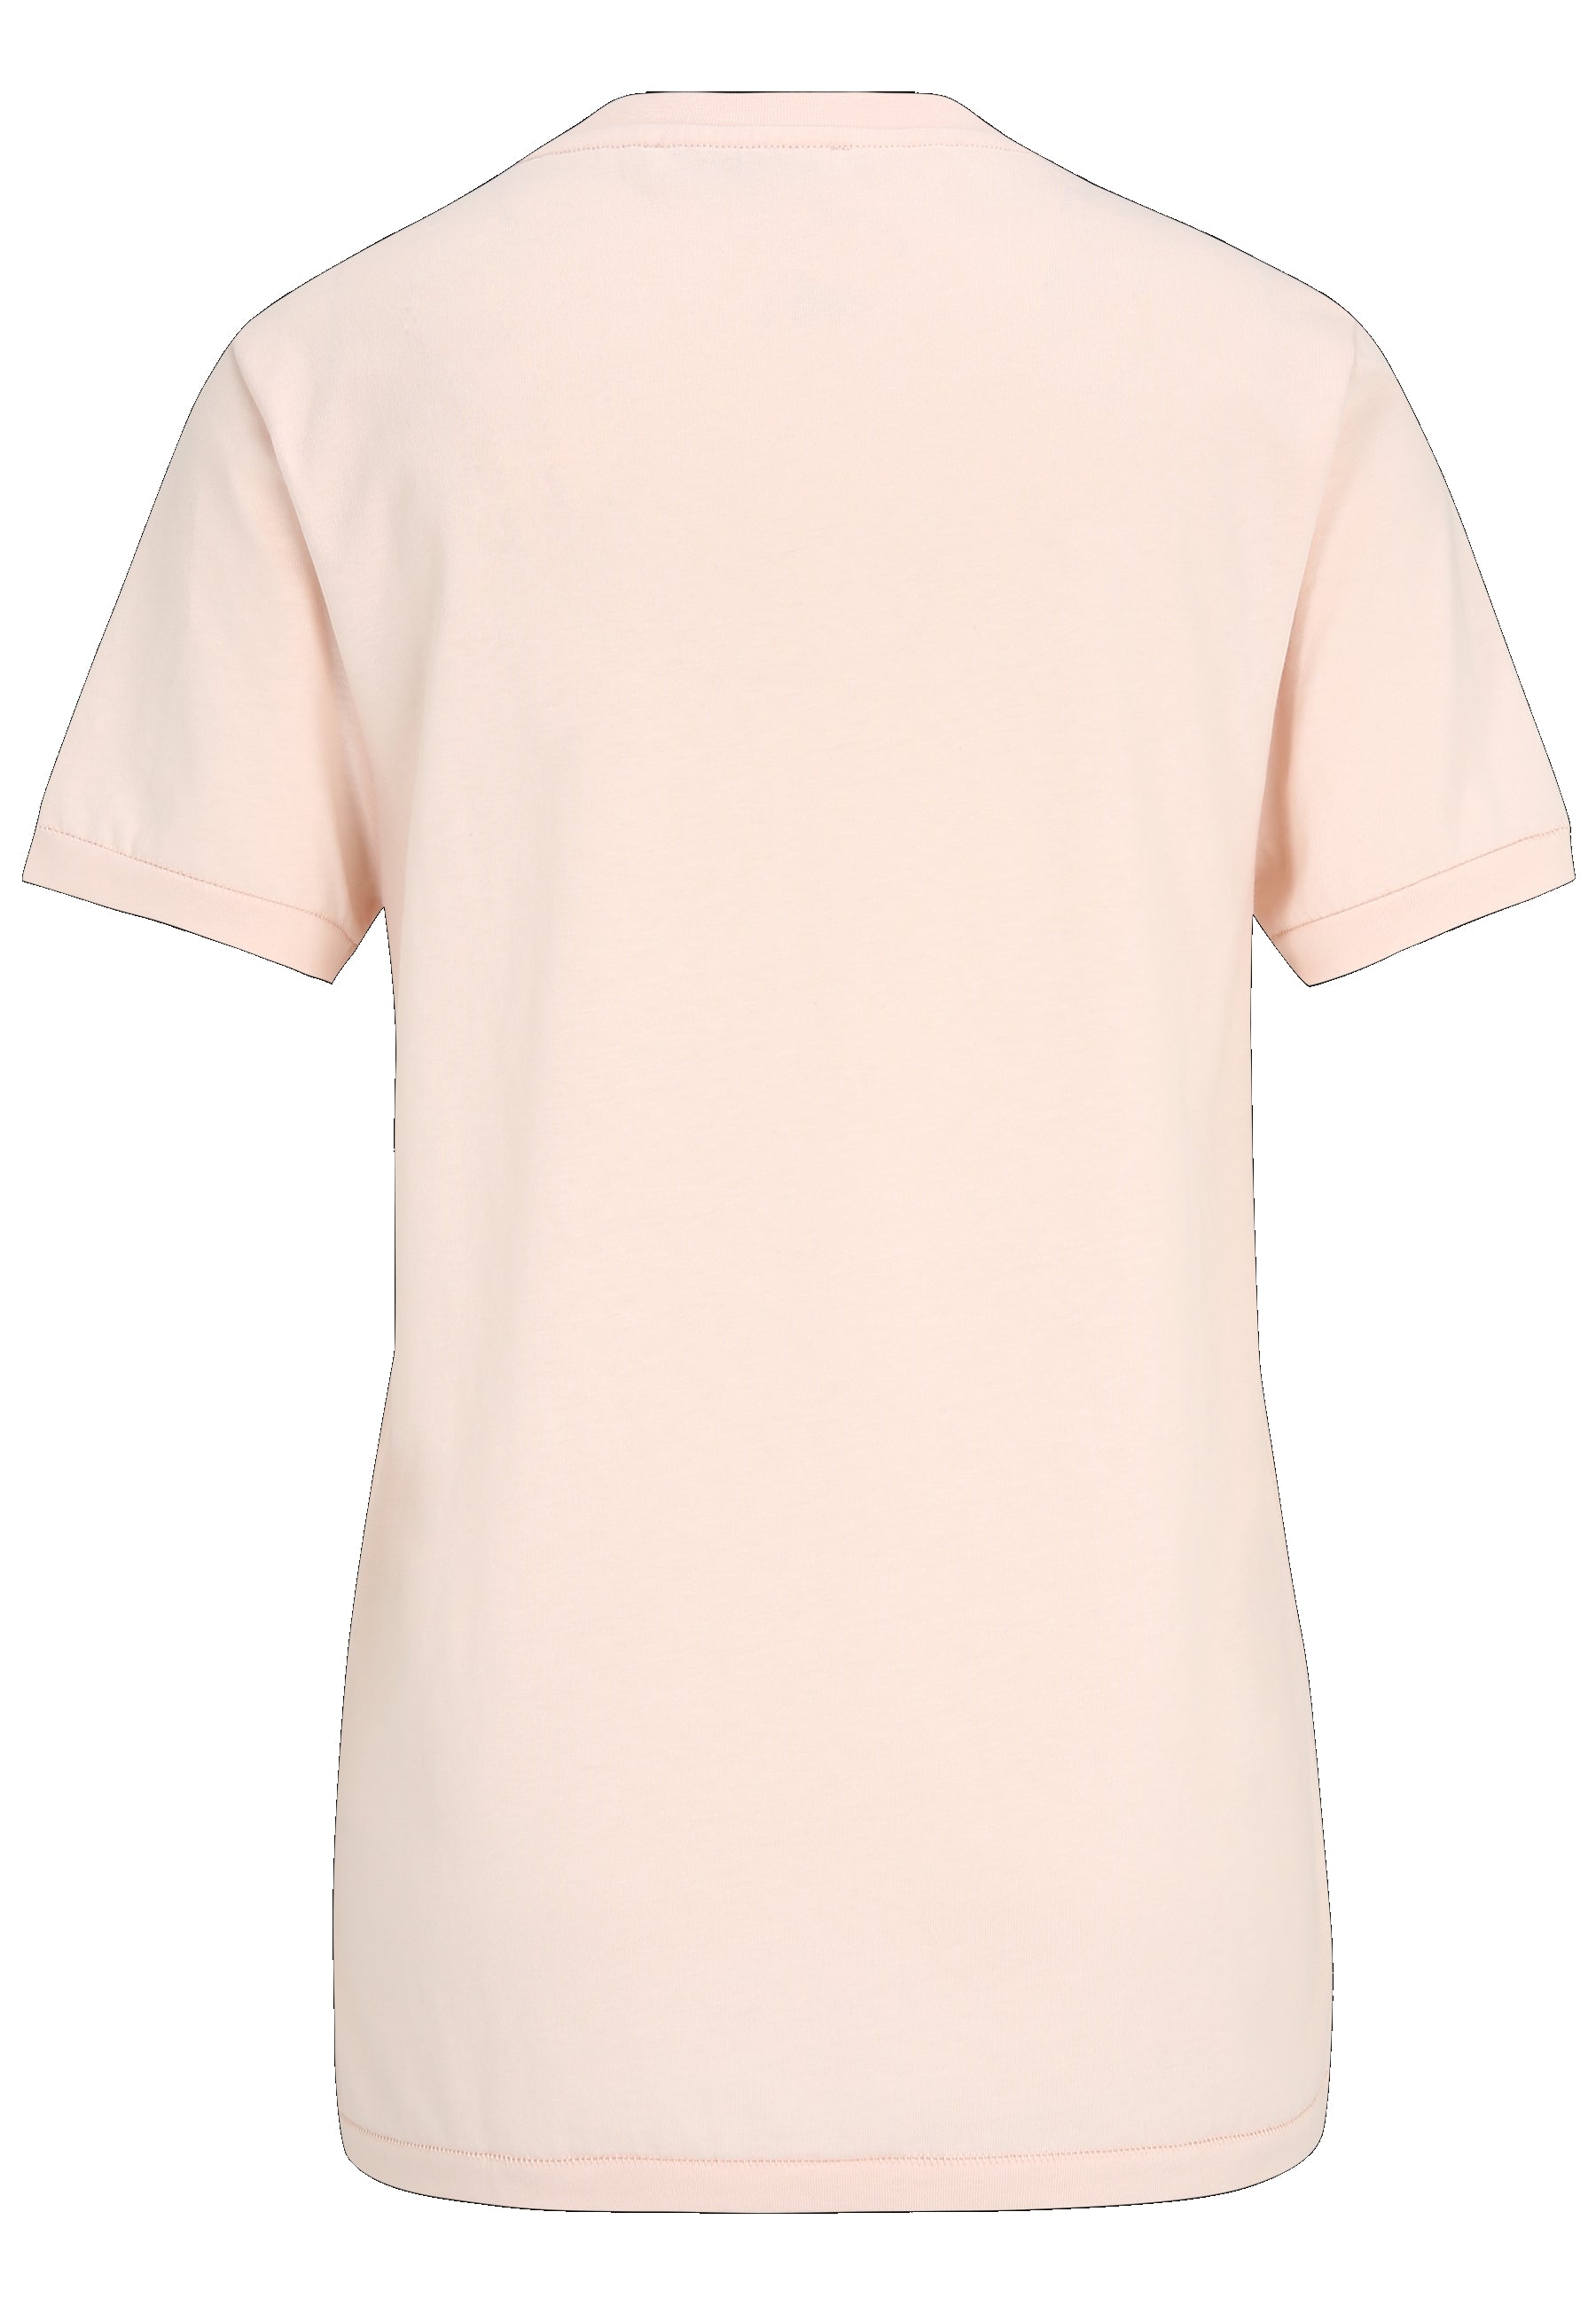 Adria Round Neck Plain Tee in Cloud Pink T-Shirts Tamaris   